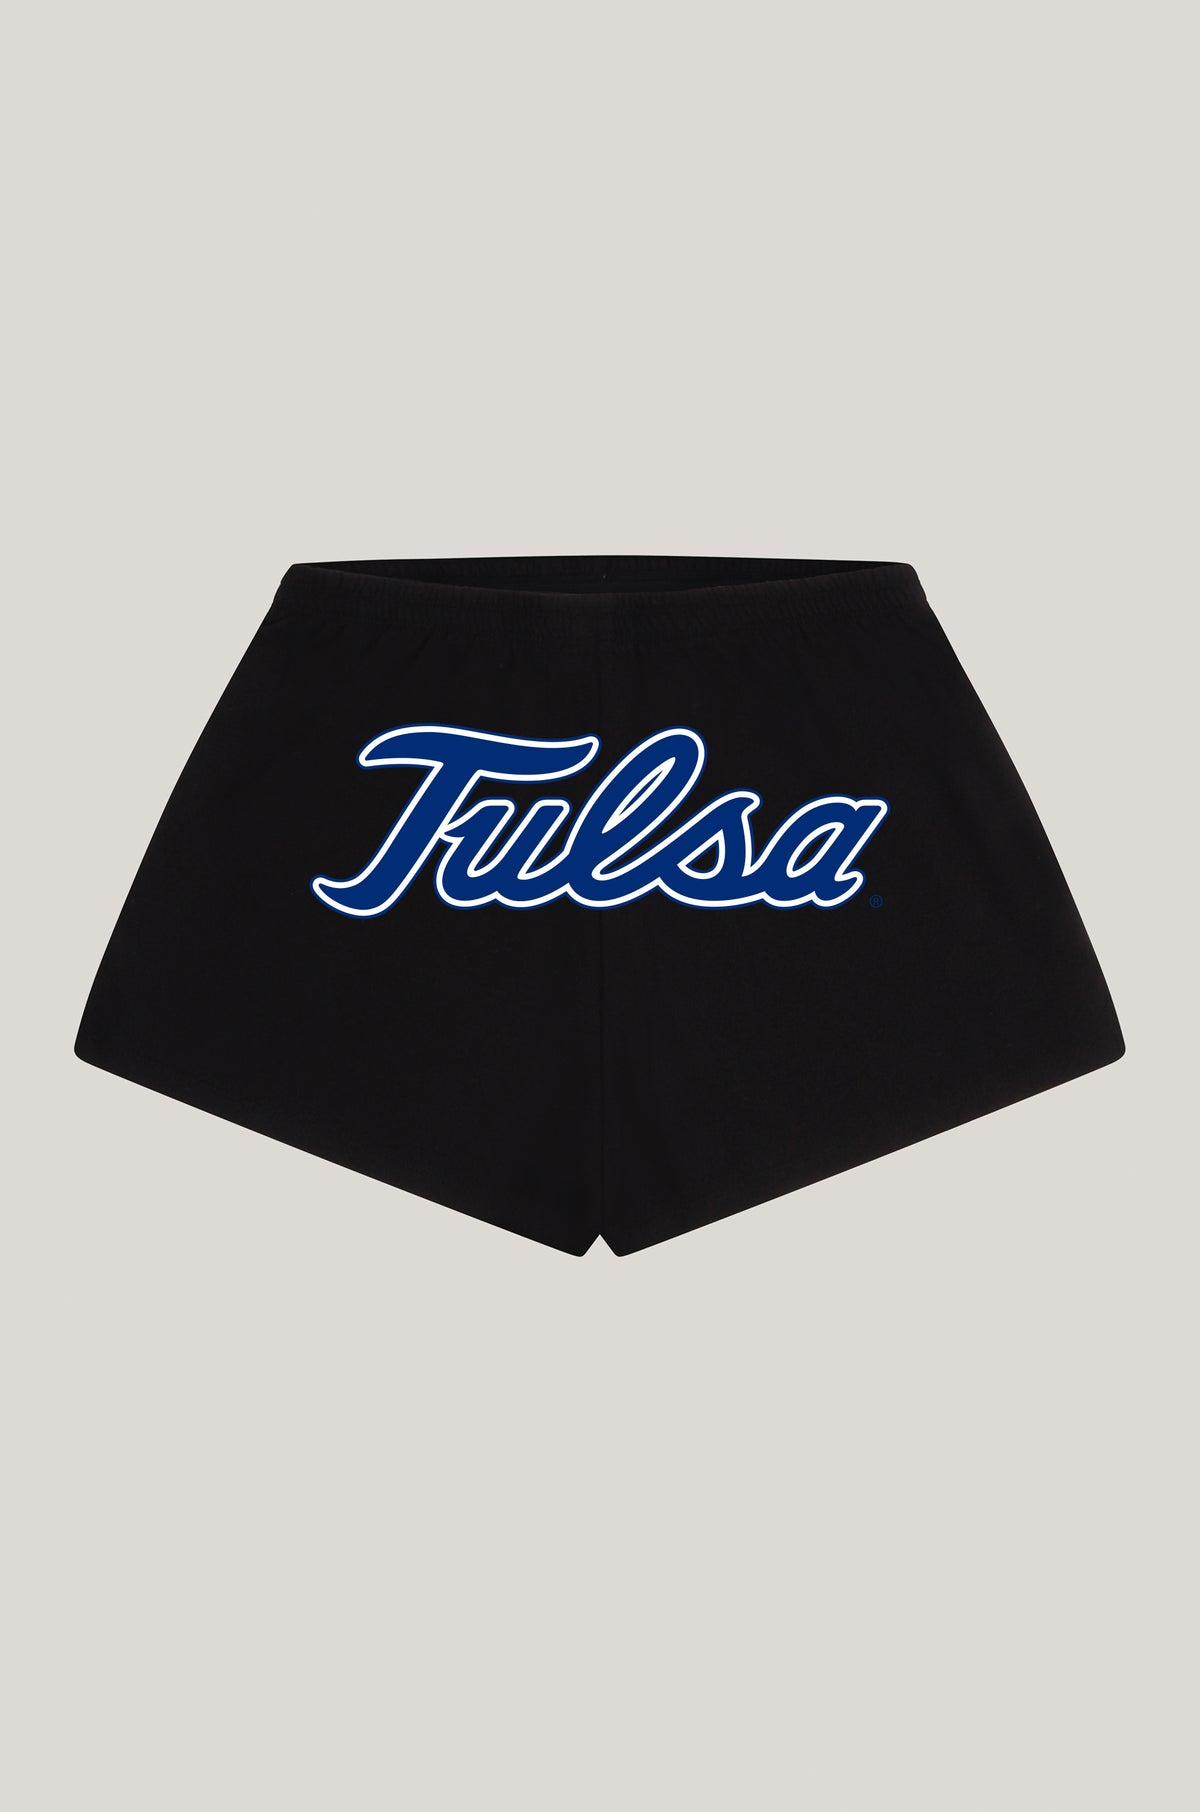 University of Tulsa P.E. Shorts